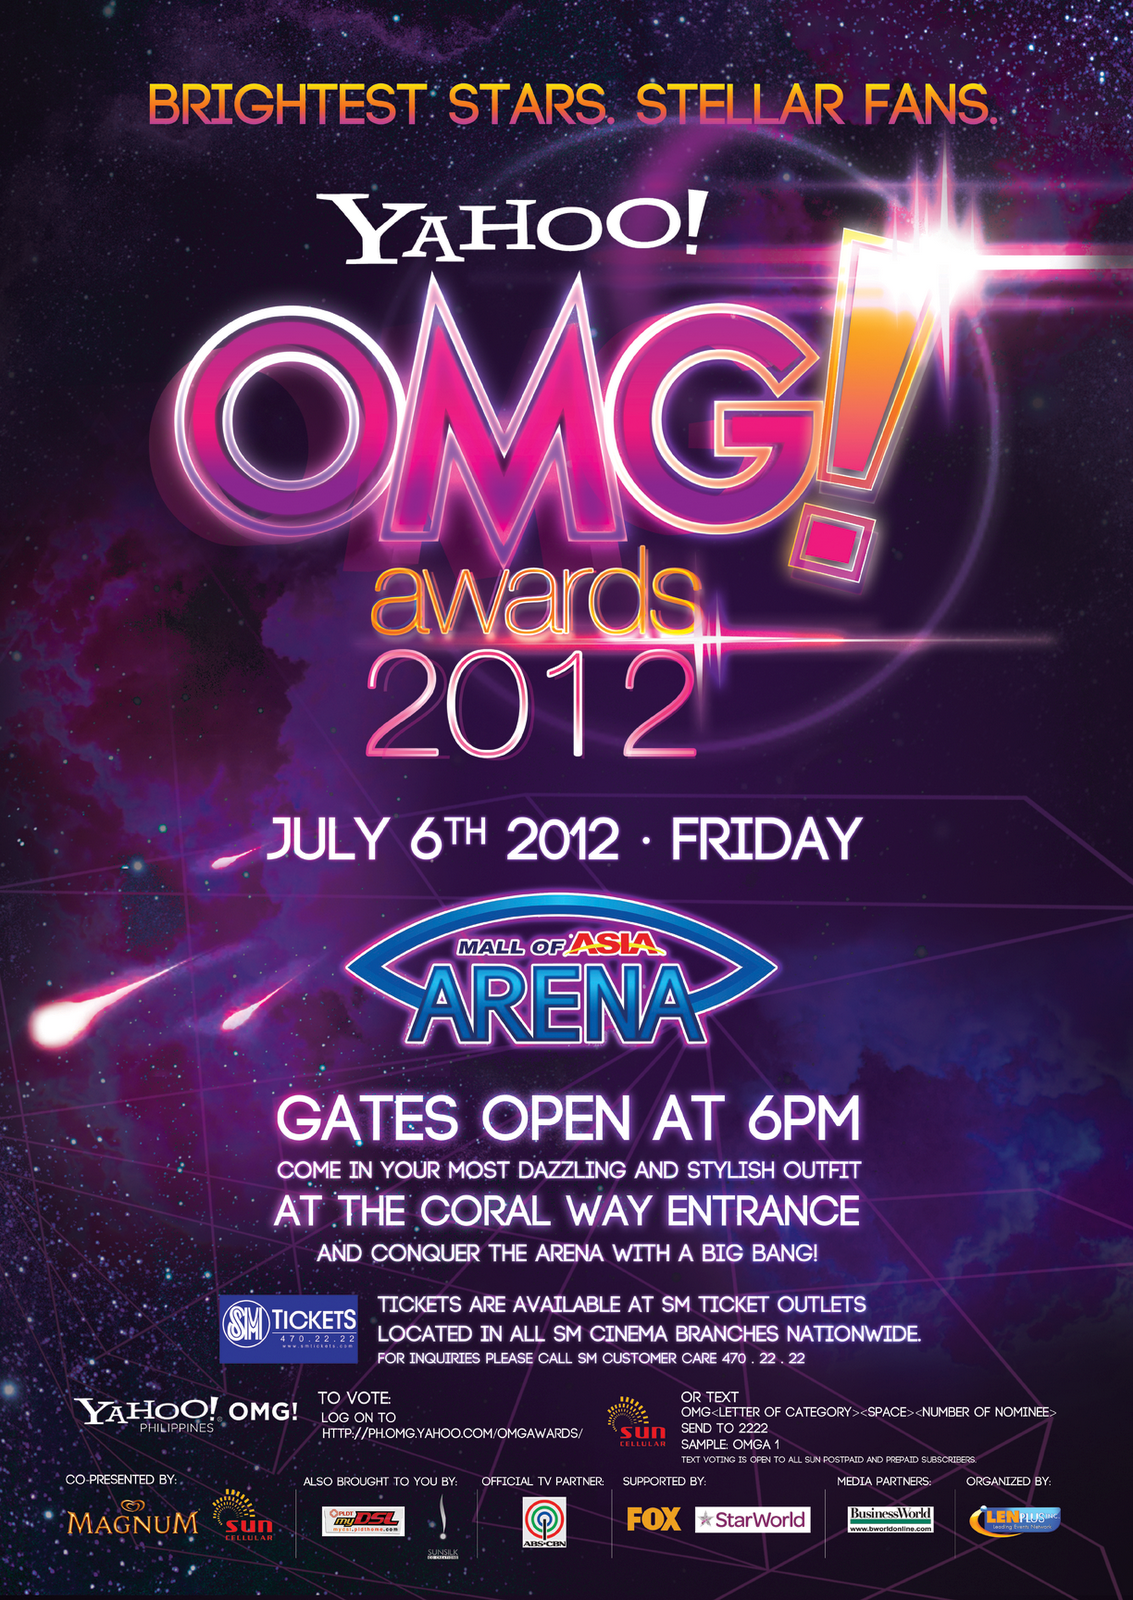 Yahoo! OMG Awards! 2012 Tickets Contest